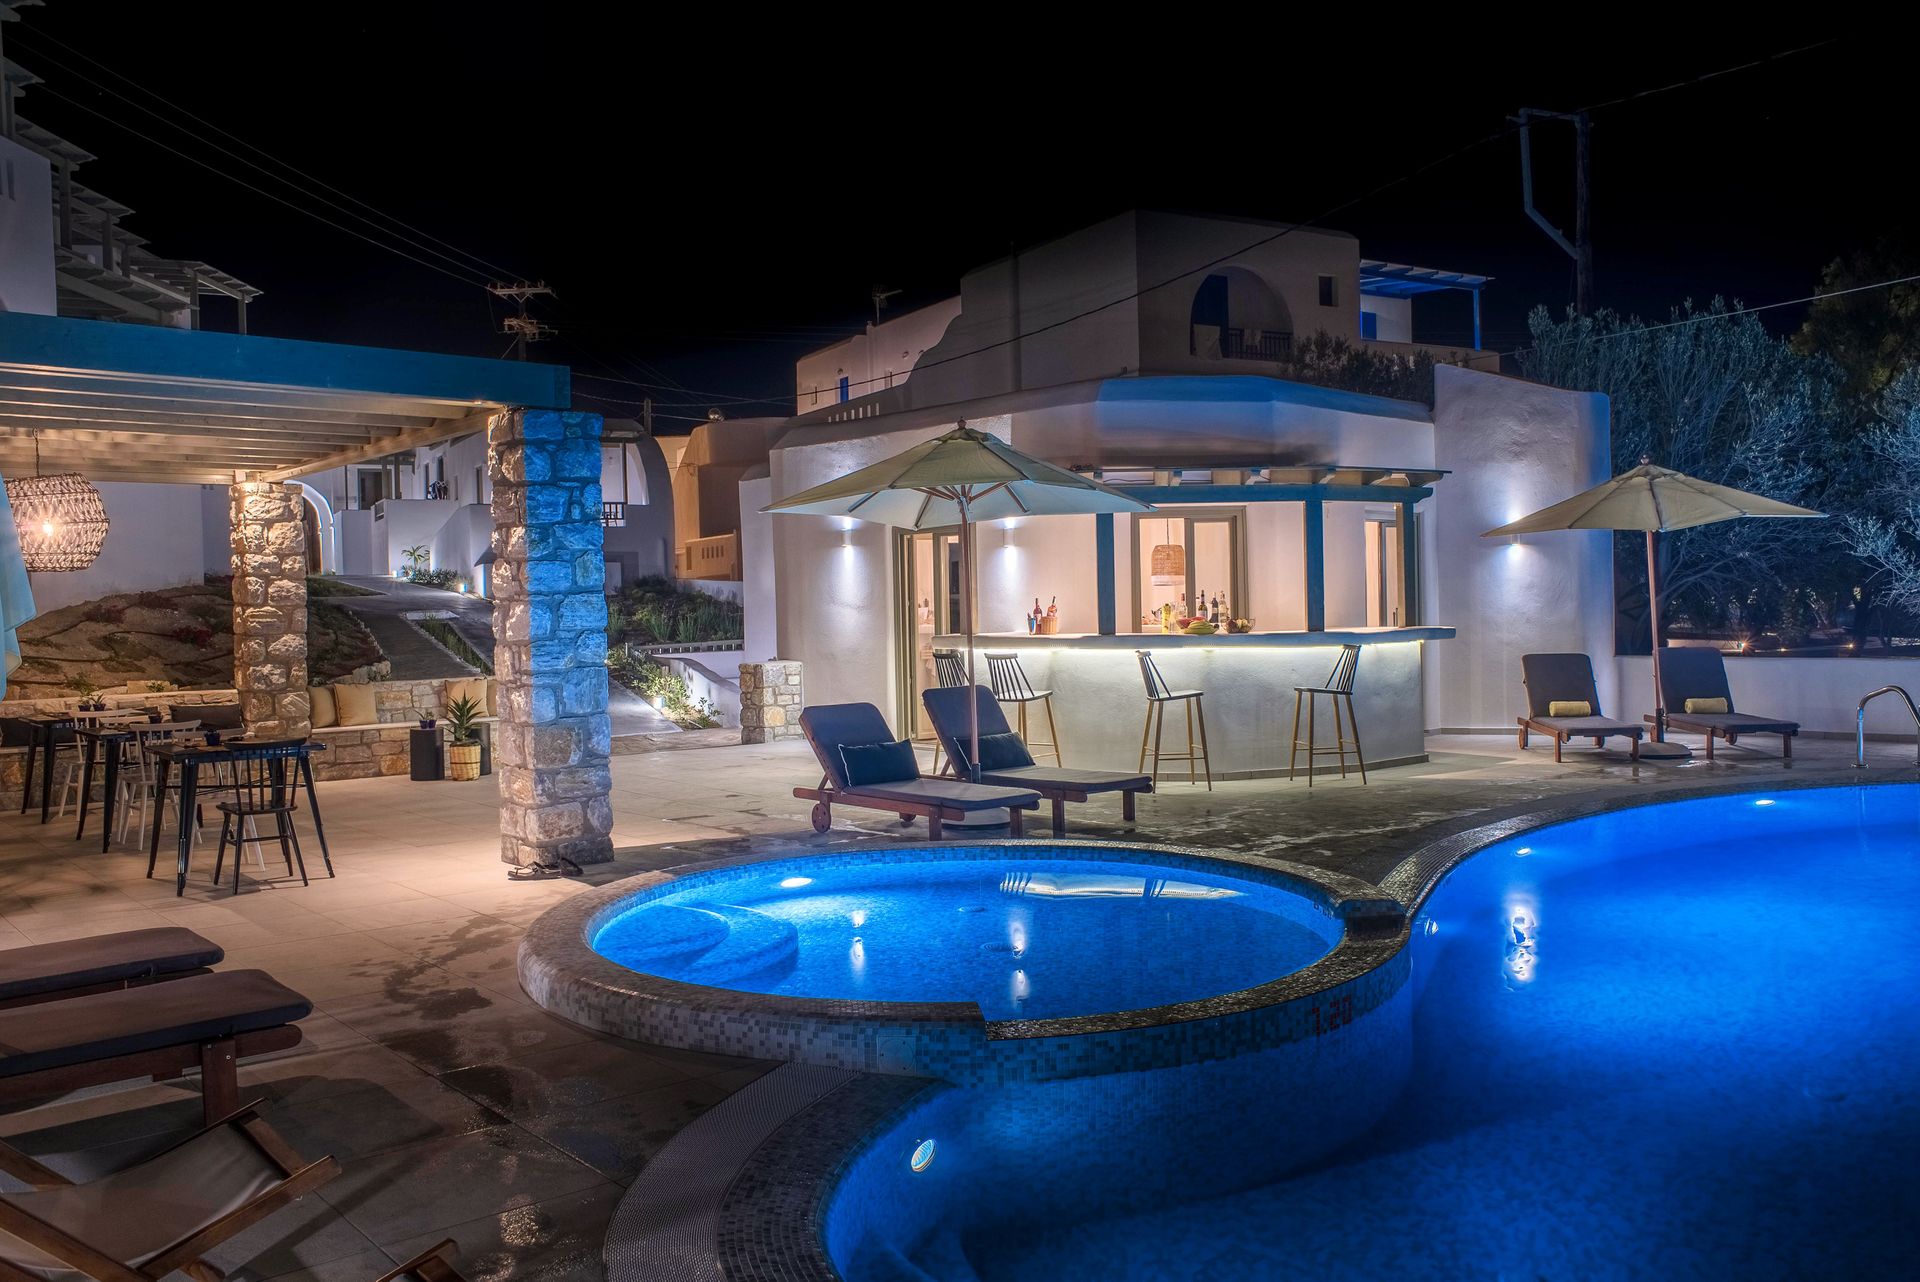 Melidron Hotel &amp; Suites - Άγιος Προκόπιος, Νάξος ✦ 2 Ημέρες (1 Διανυκτέρευση) ✦ 2 άτομα ✦ Πρωινό ✦ 15/05/2022 έως 30/09/2022 ✦ Κοντά σε Παραλία!